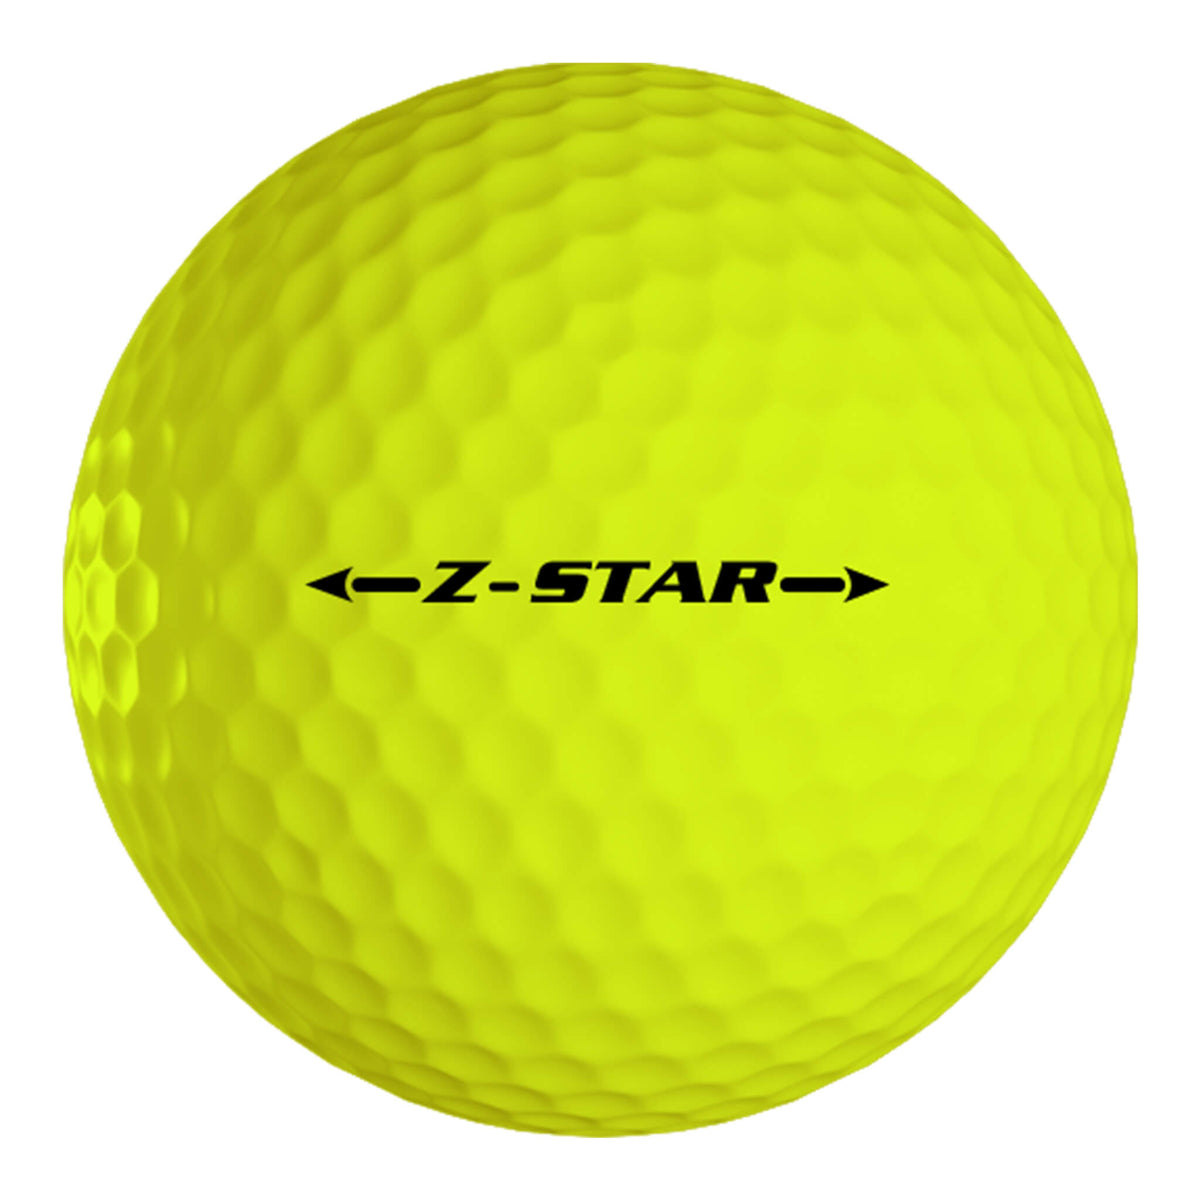 Srixon Z-Star / Z-Star X / XV Yellow